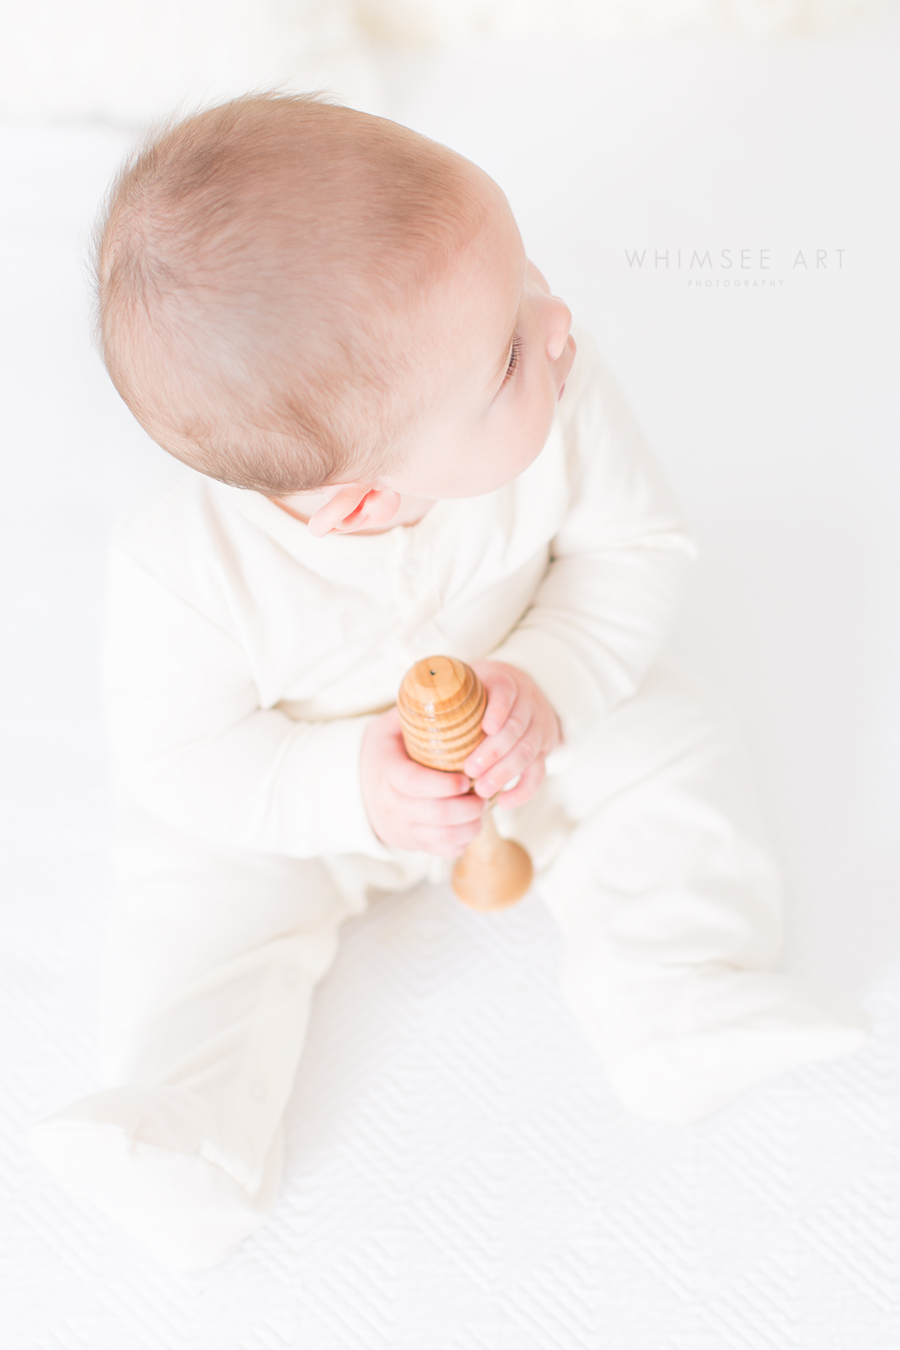 Little Hands | Roanoke Baby Photographers | Whimsee Art Photography